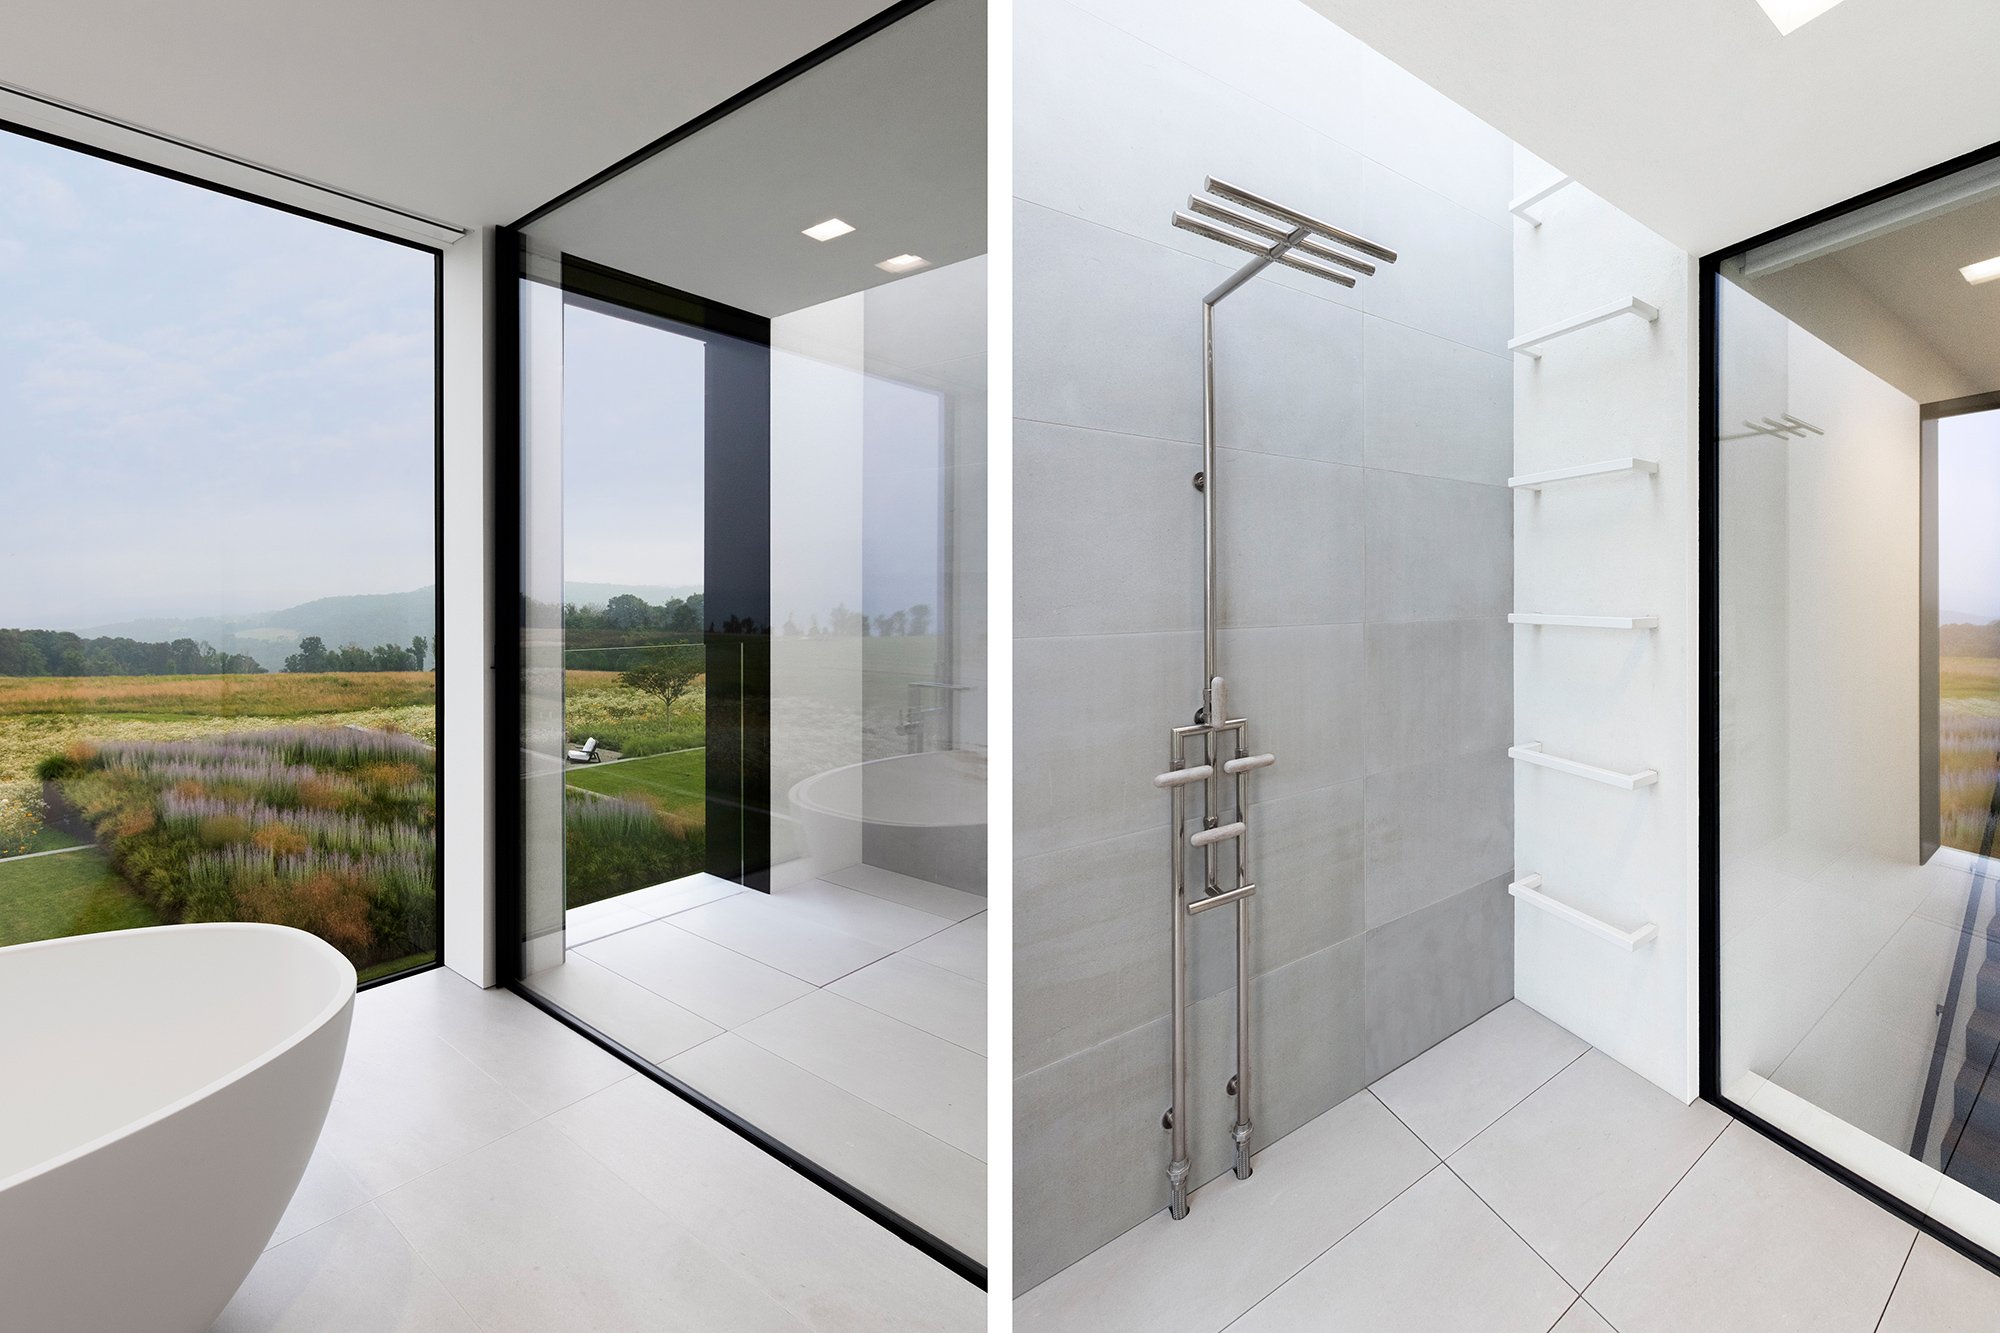 50_res4-resolution-4-architecture-millbrook-residence-modern-home-new-york-hudson-valley-custom-high-end-residential-his-master-bathroom-outdoor-shower.jpg